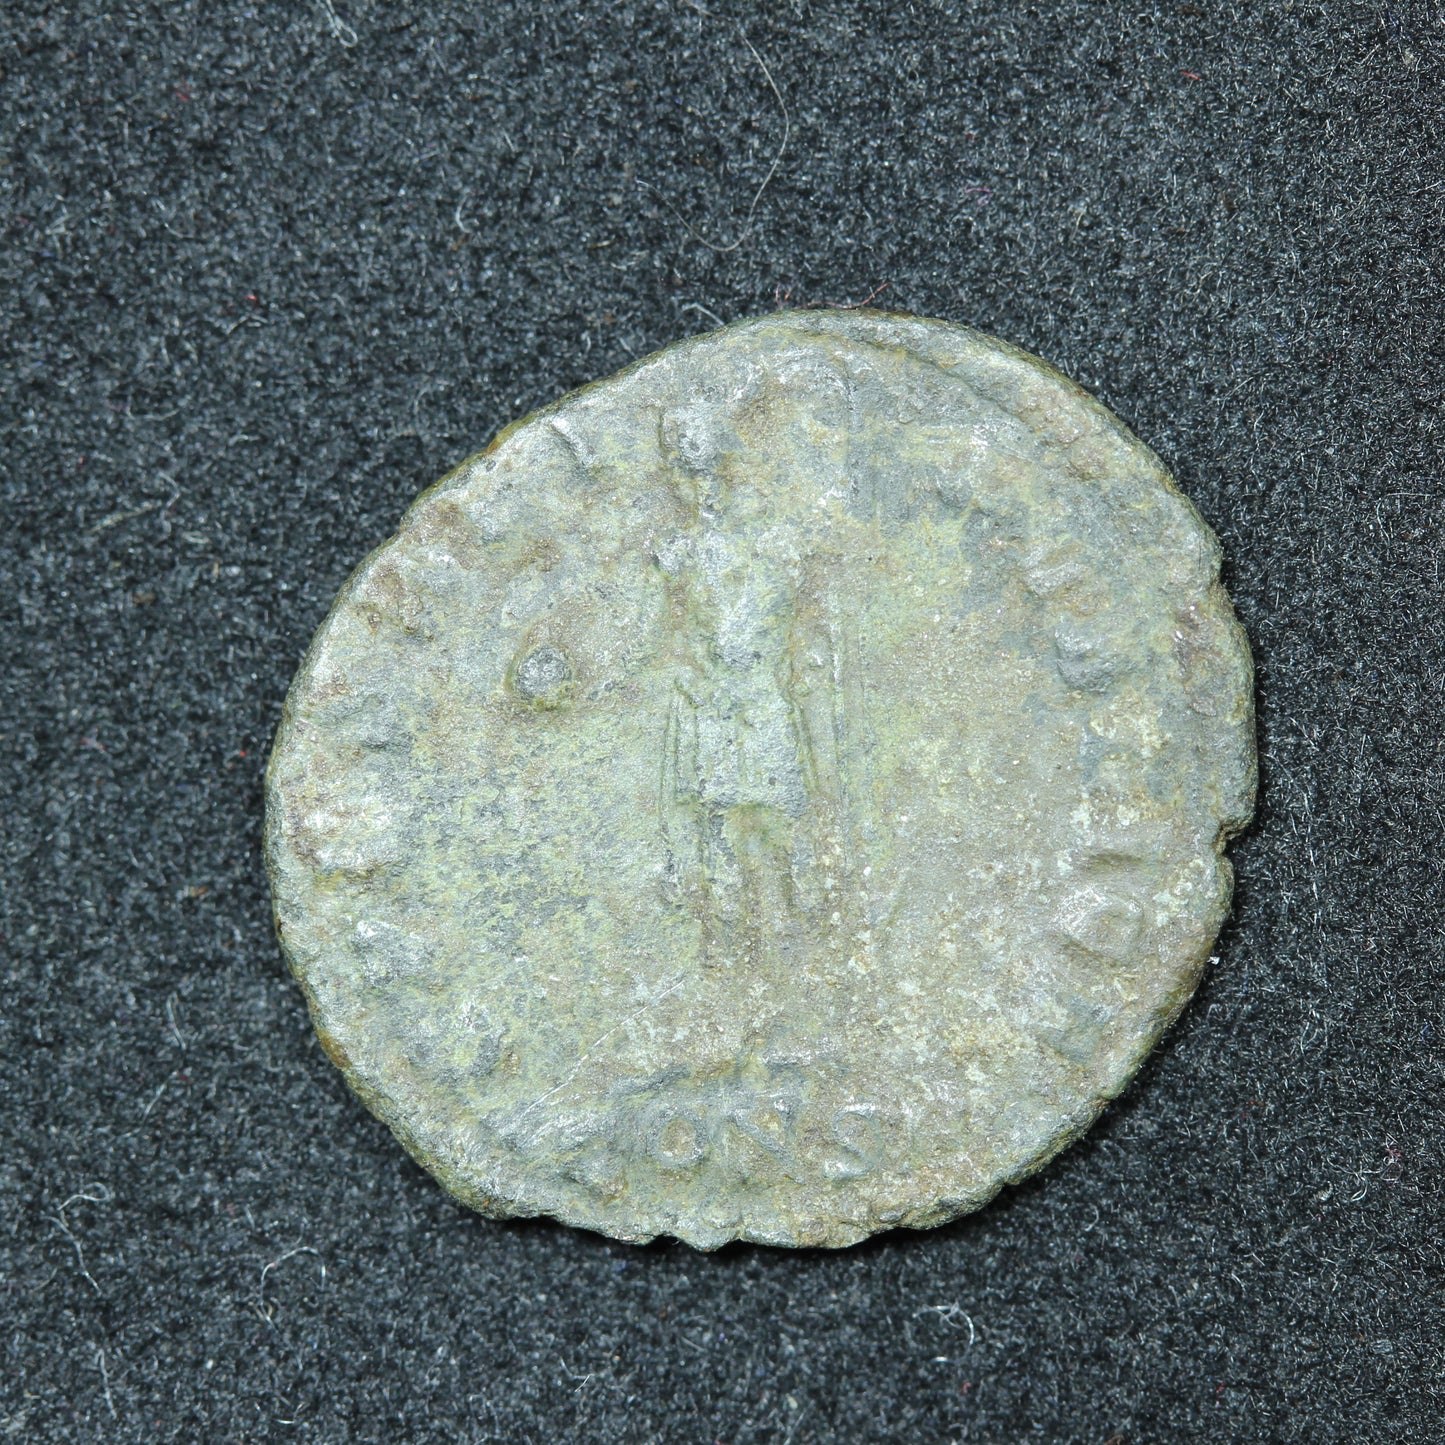 Constantius II. 337-361 AD. Emperor Holding Spear and Globe Reverse - SB #4011